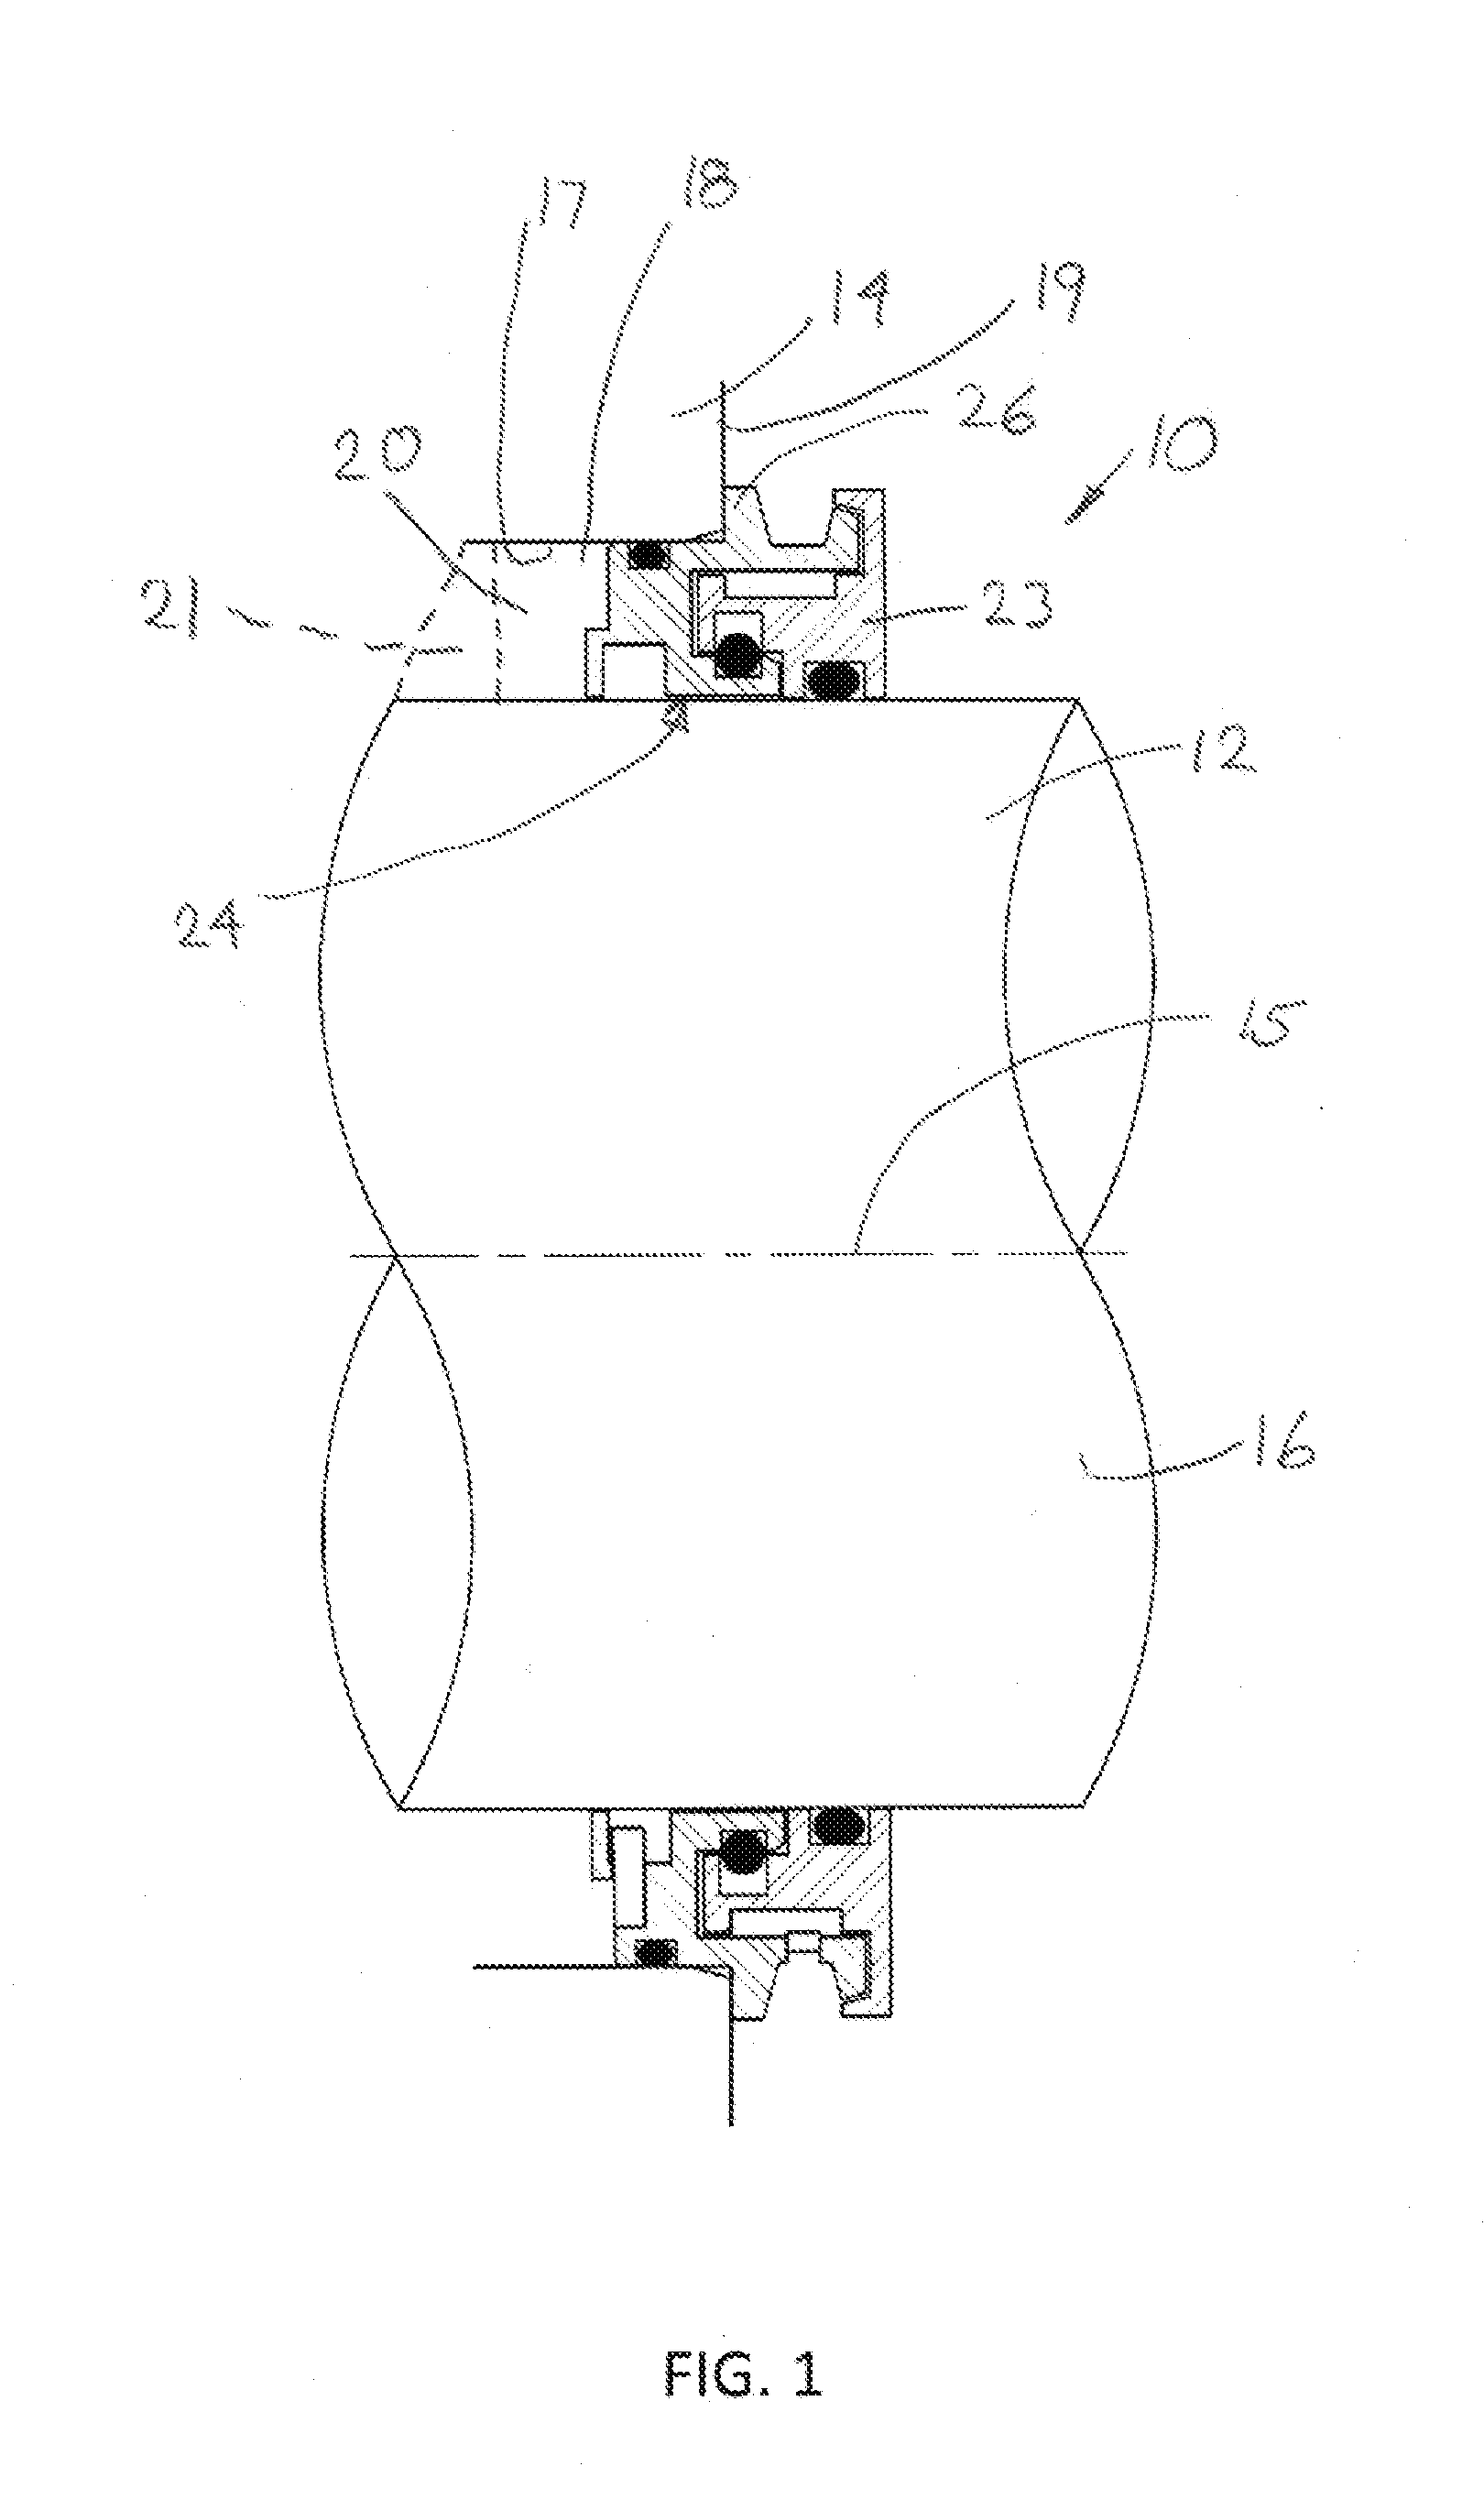 Bearing isolator seal for rotating shaft